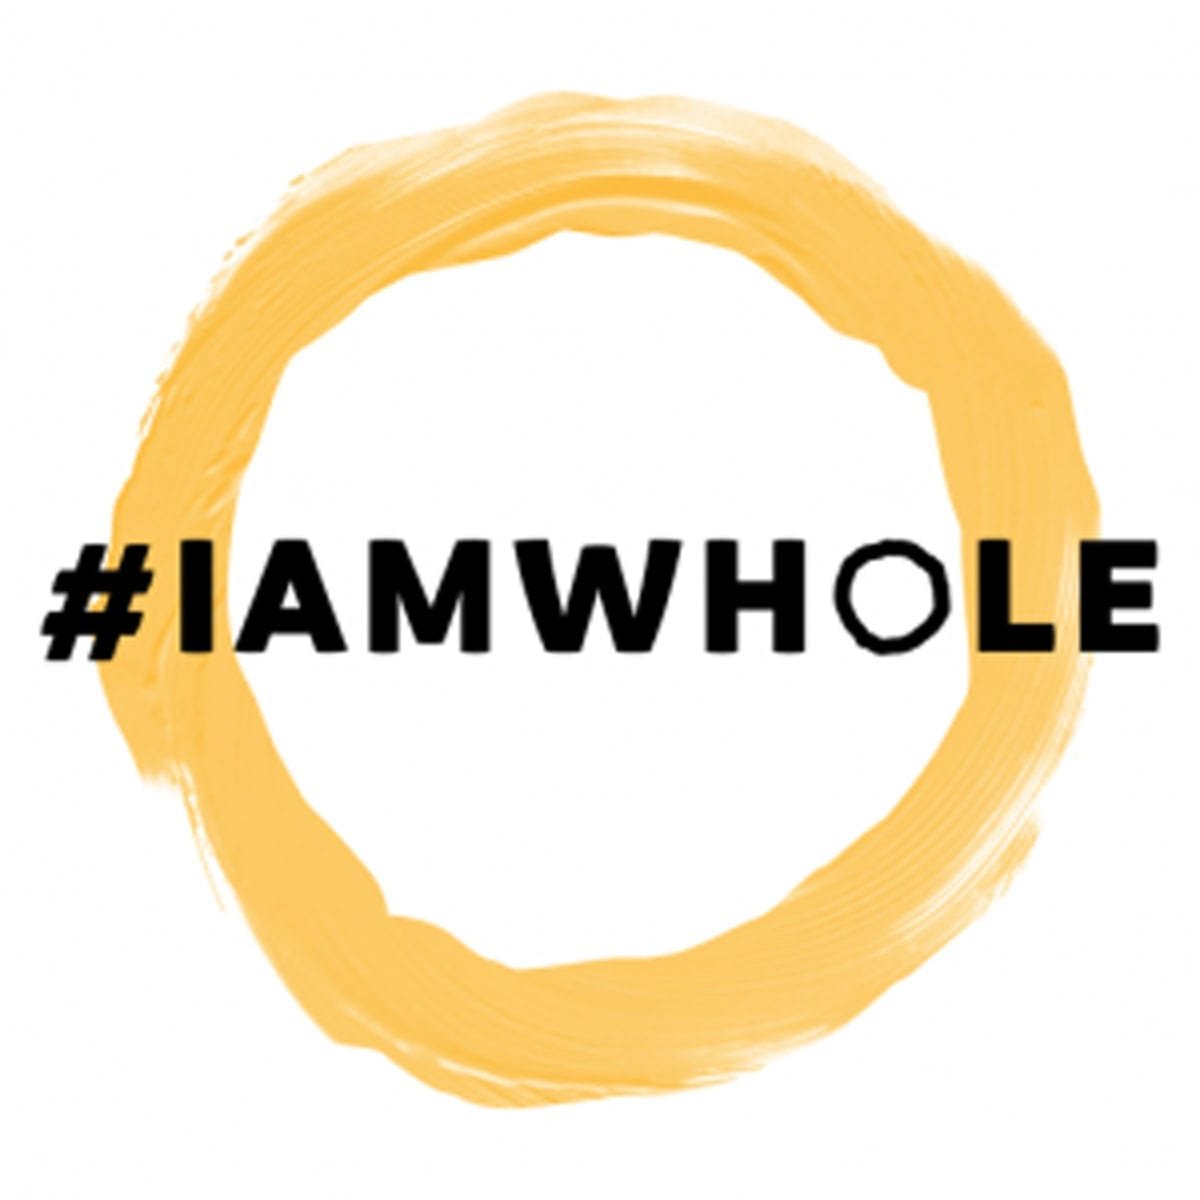 I am whole